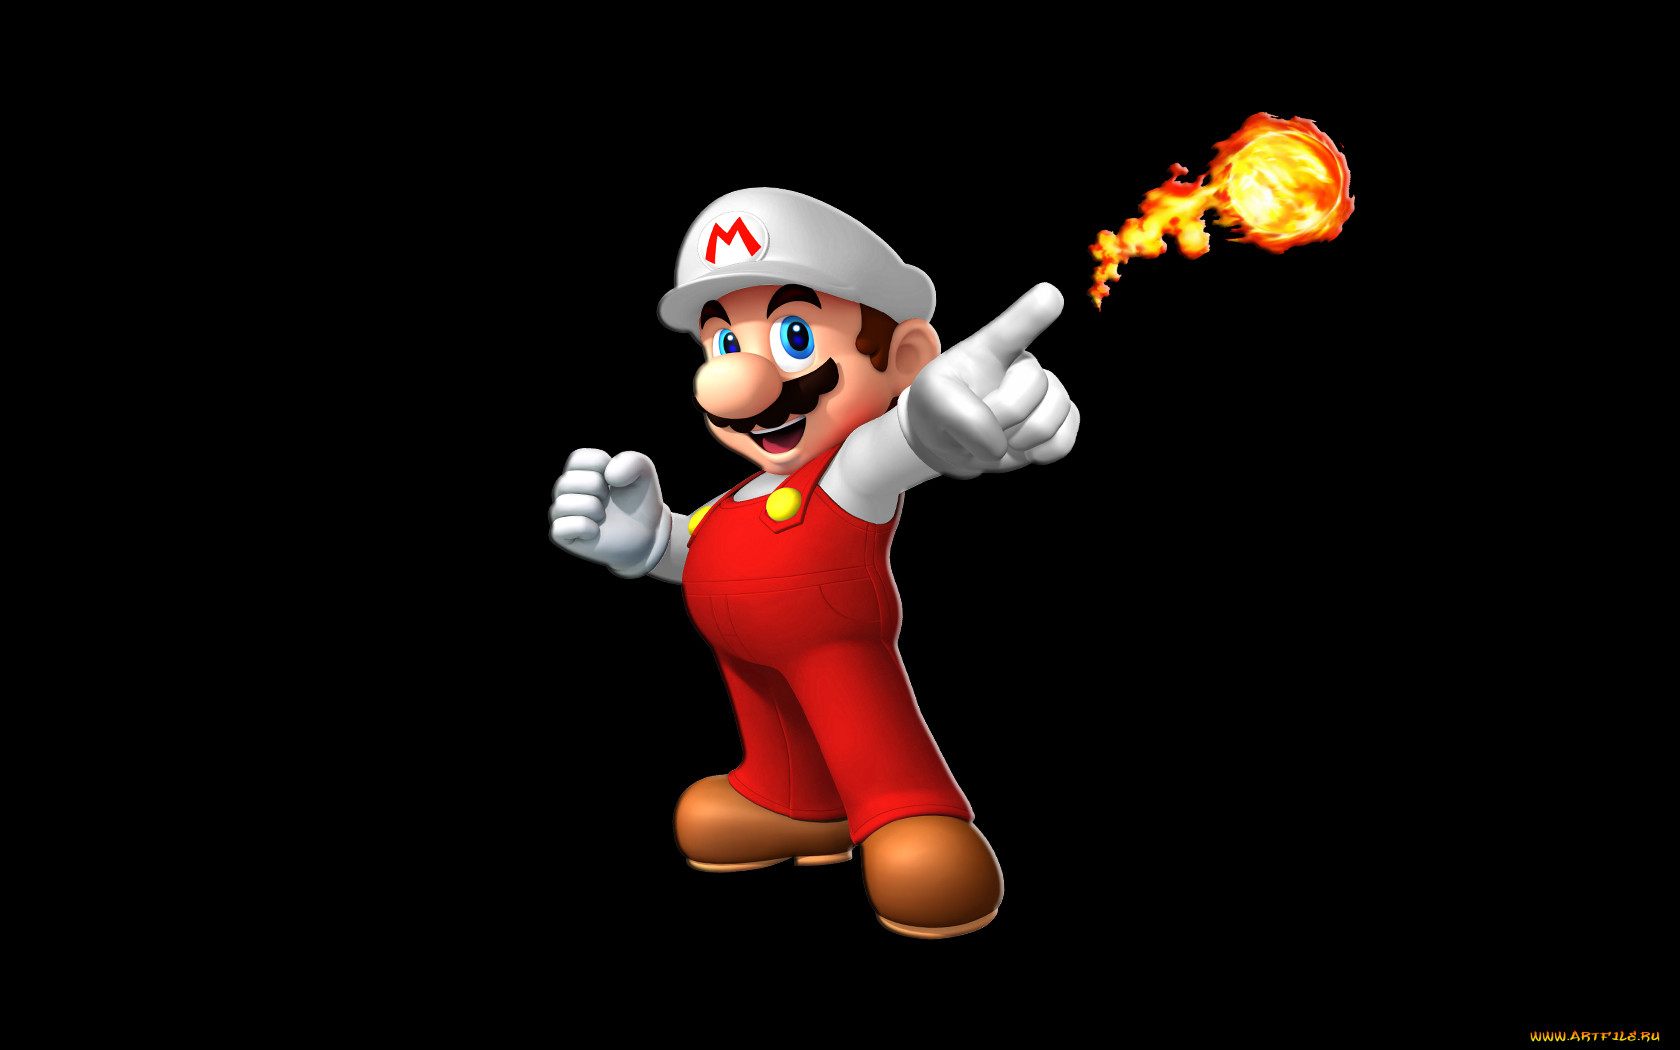 Марио из игры. Марио. Марио с пистолетом. Супер Марио огонь. Фон игры Марио.